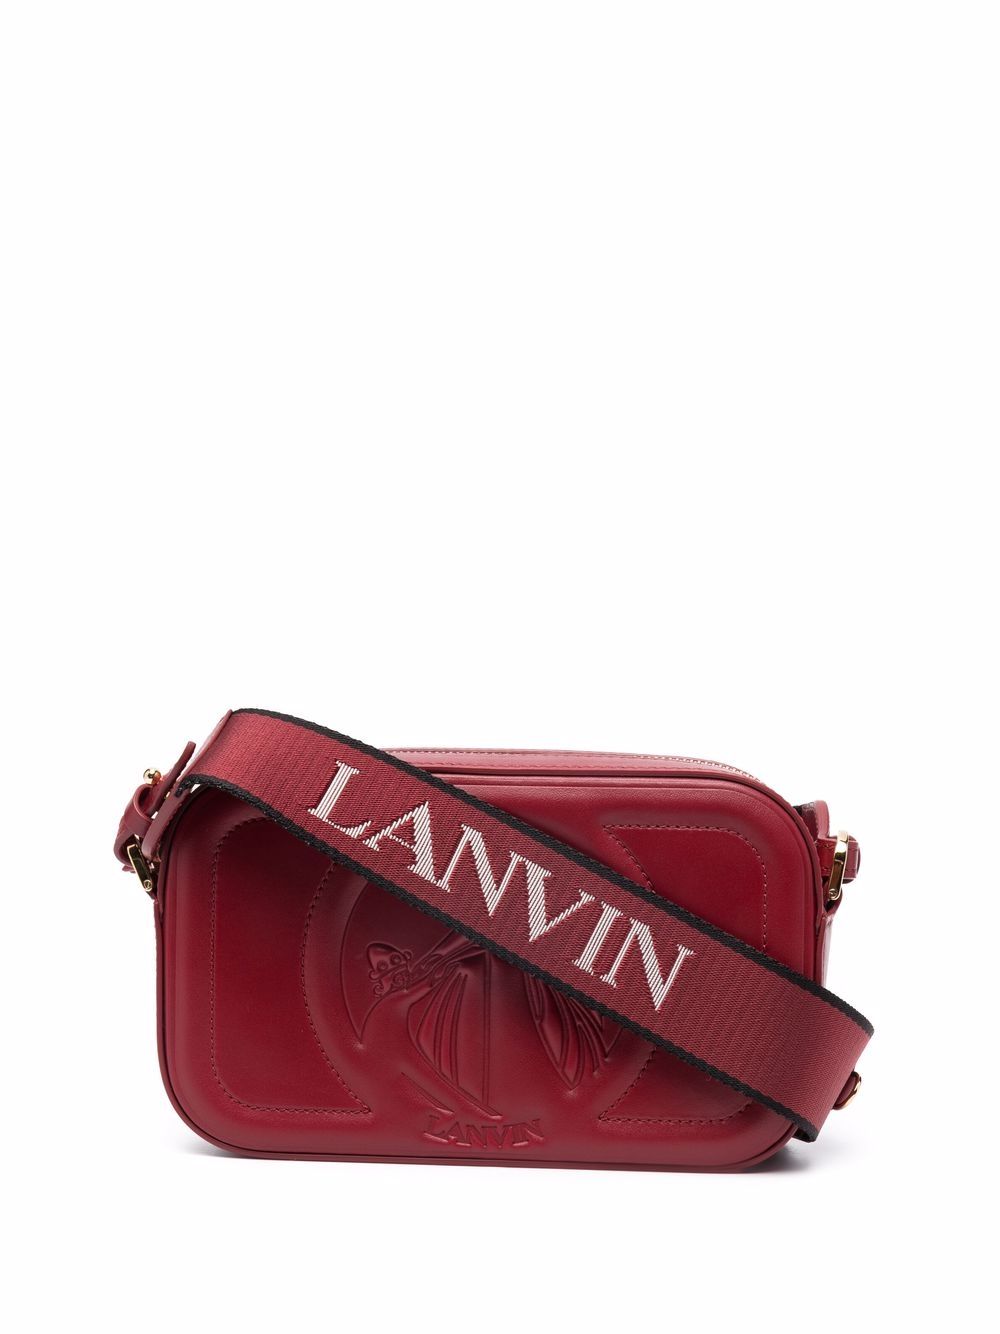 фото Lanvin каркасная сумка с тисненым логотипом